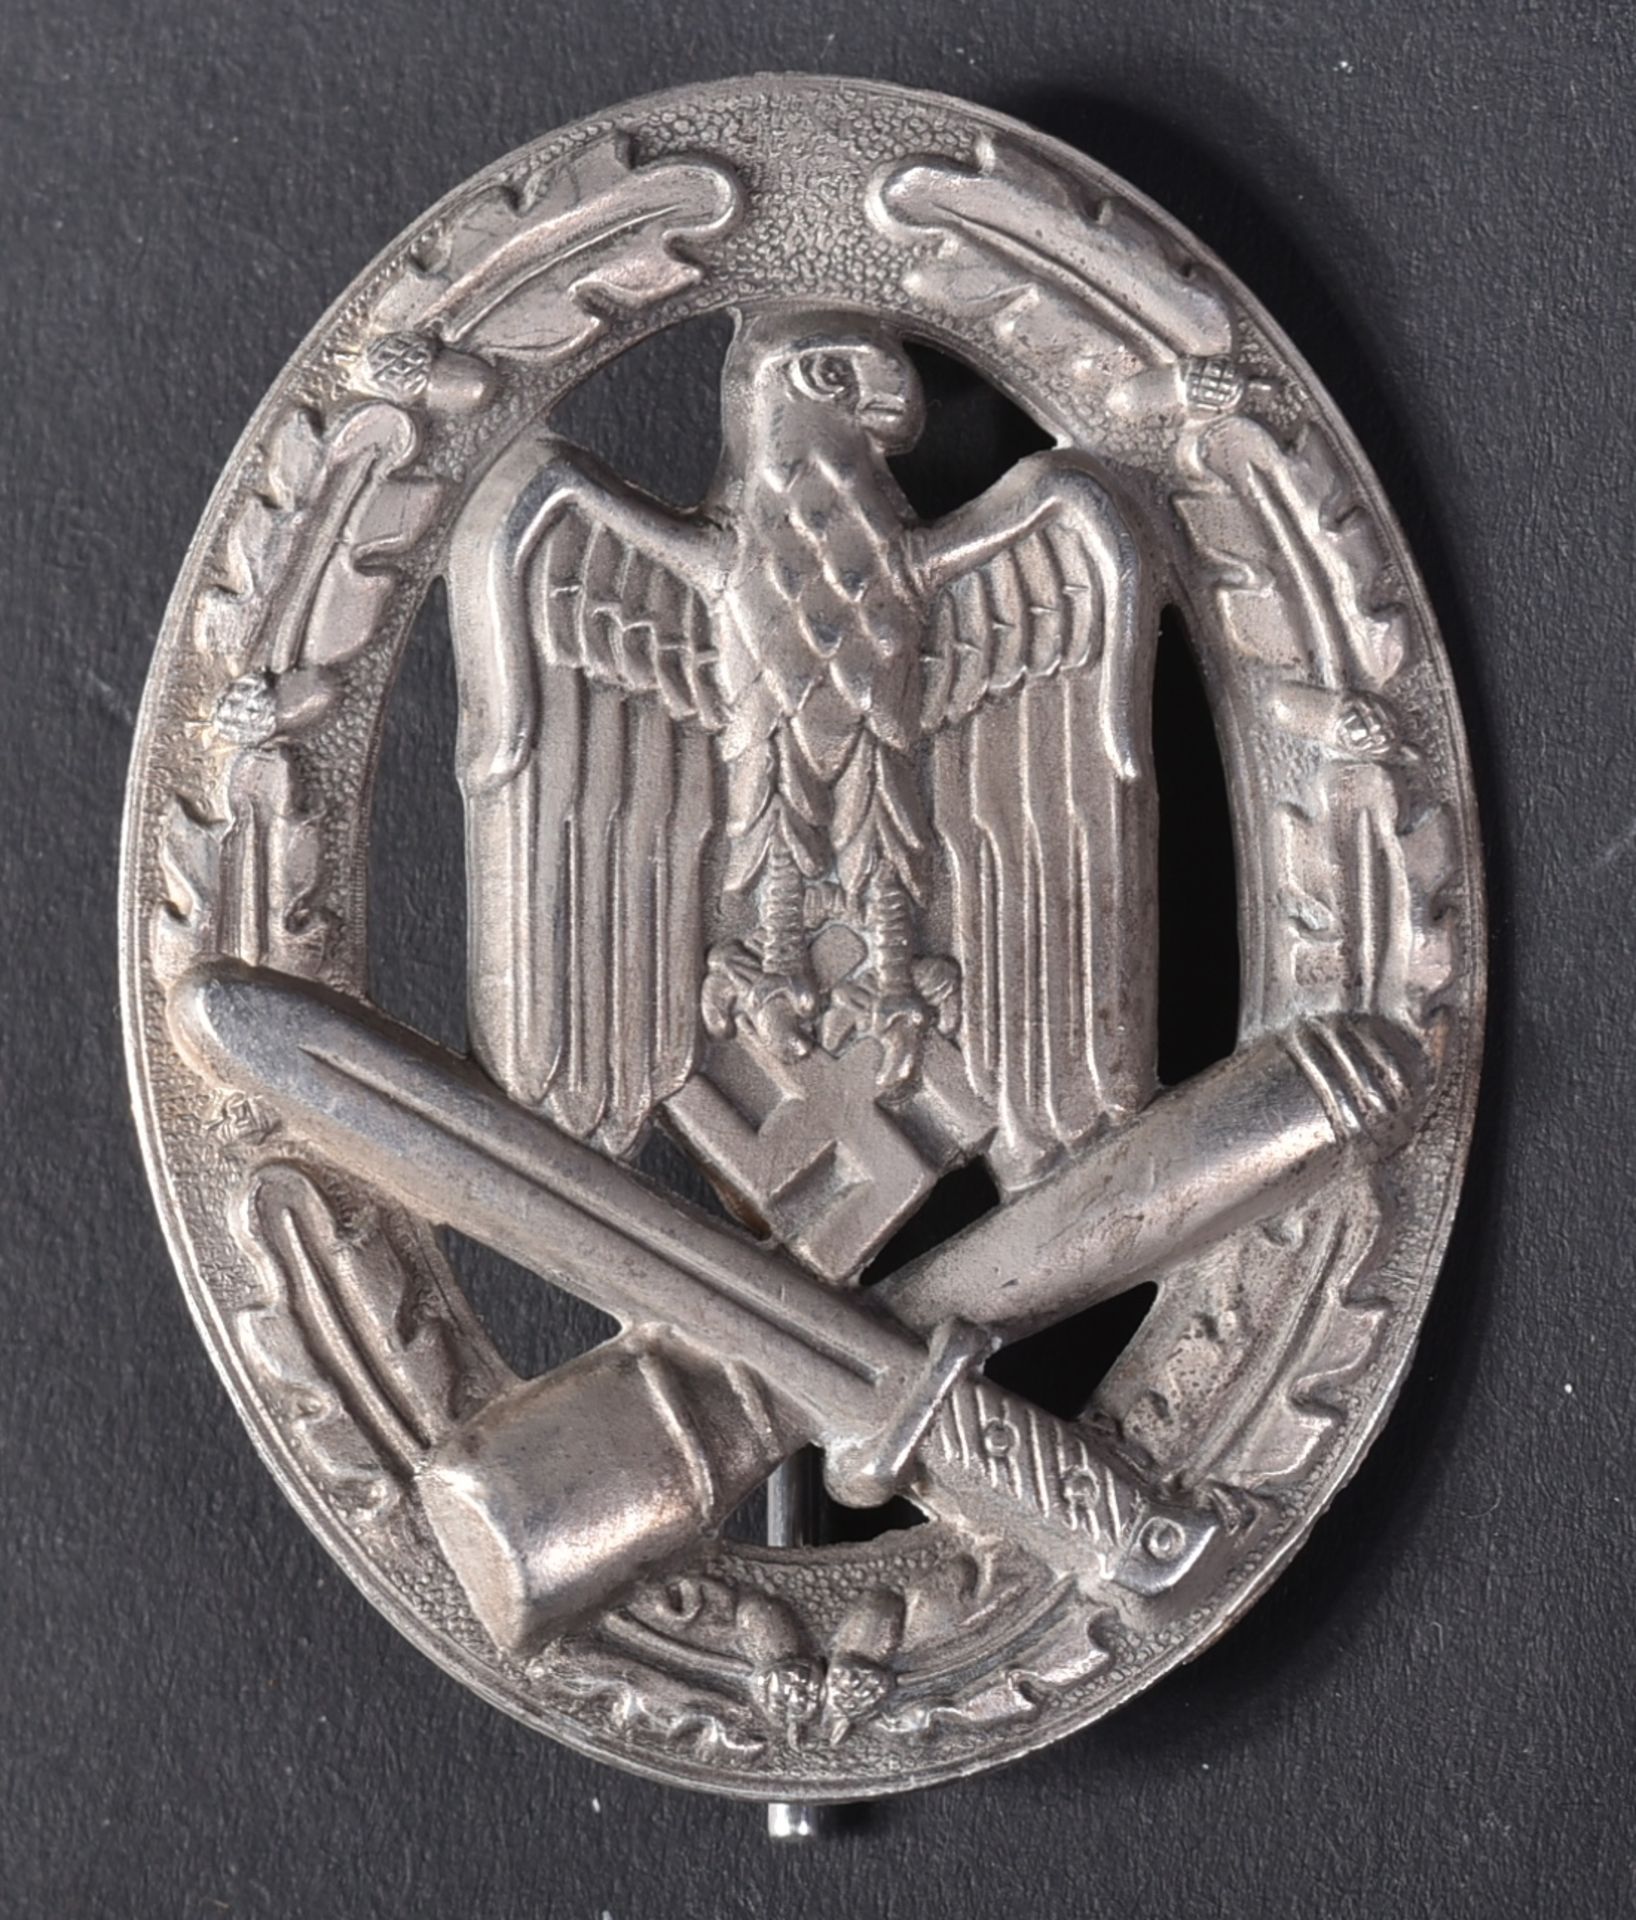 SECOND WORLD WAR GERMAN THIRD REICH GENERAL ASSAULT BADGE - Image 2 of 4